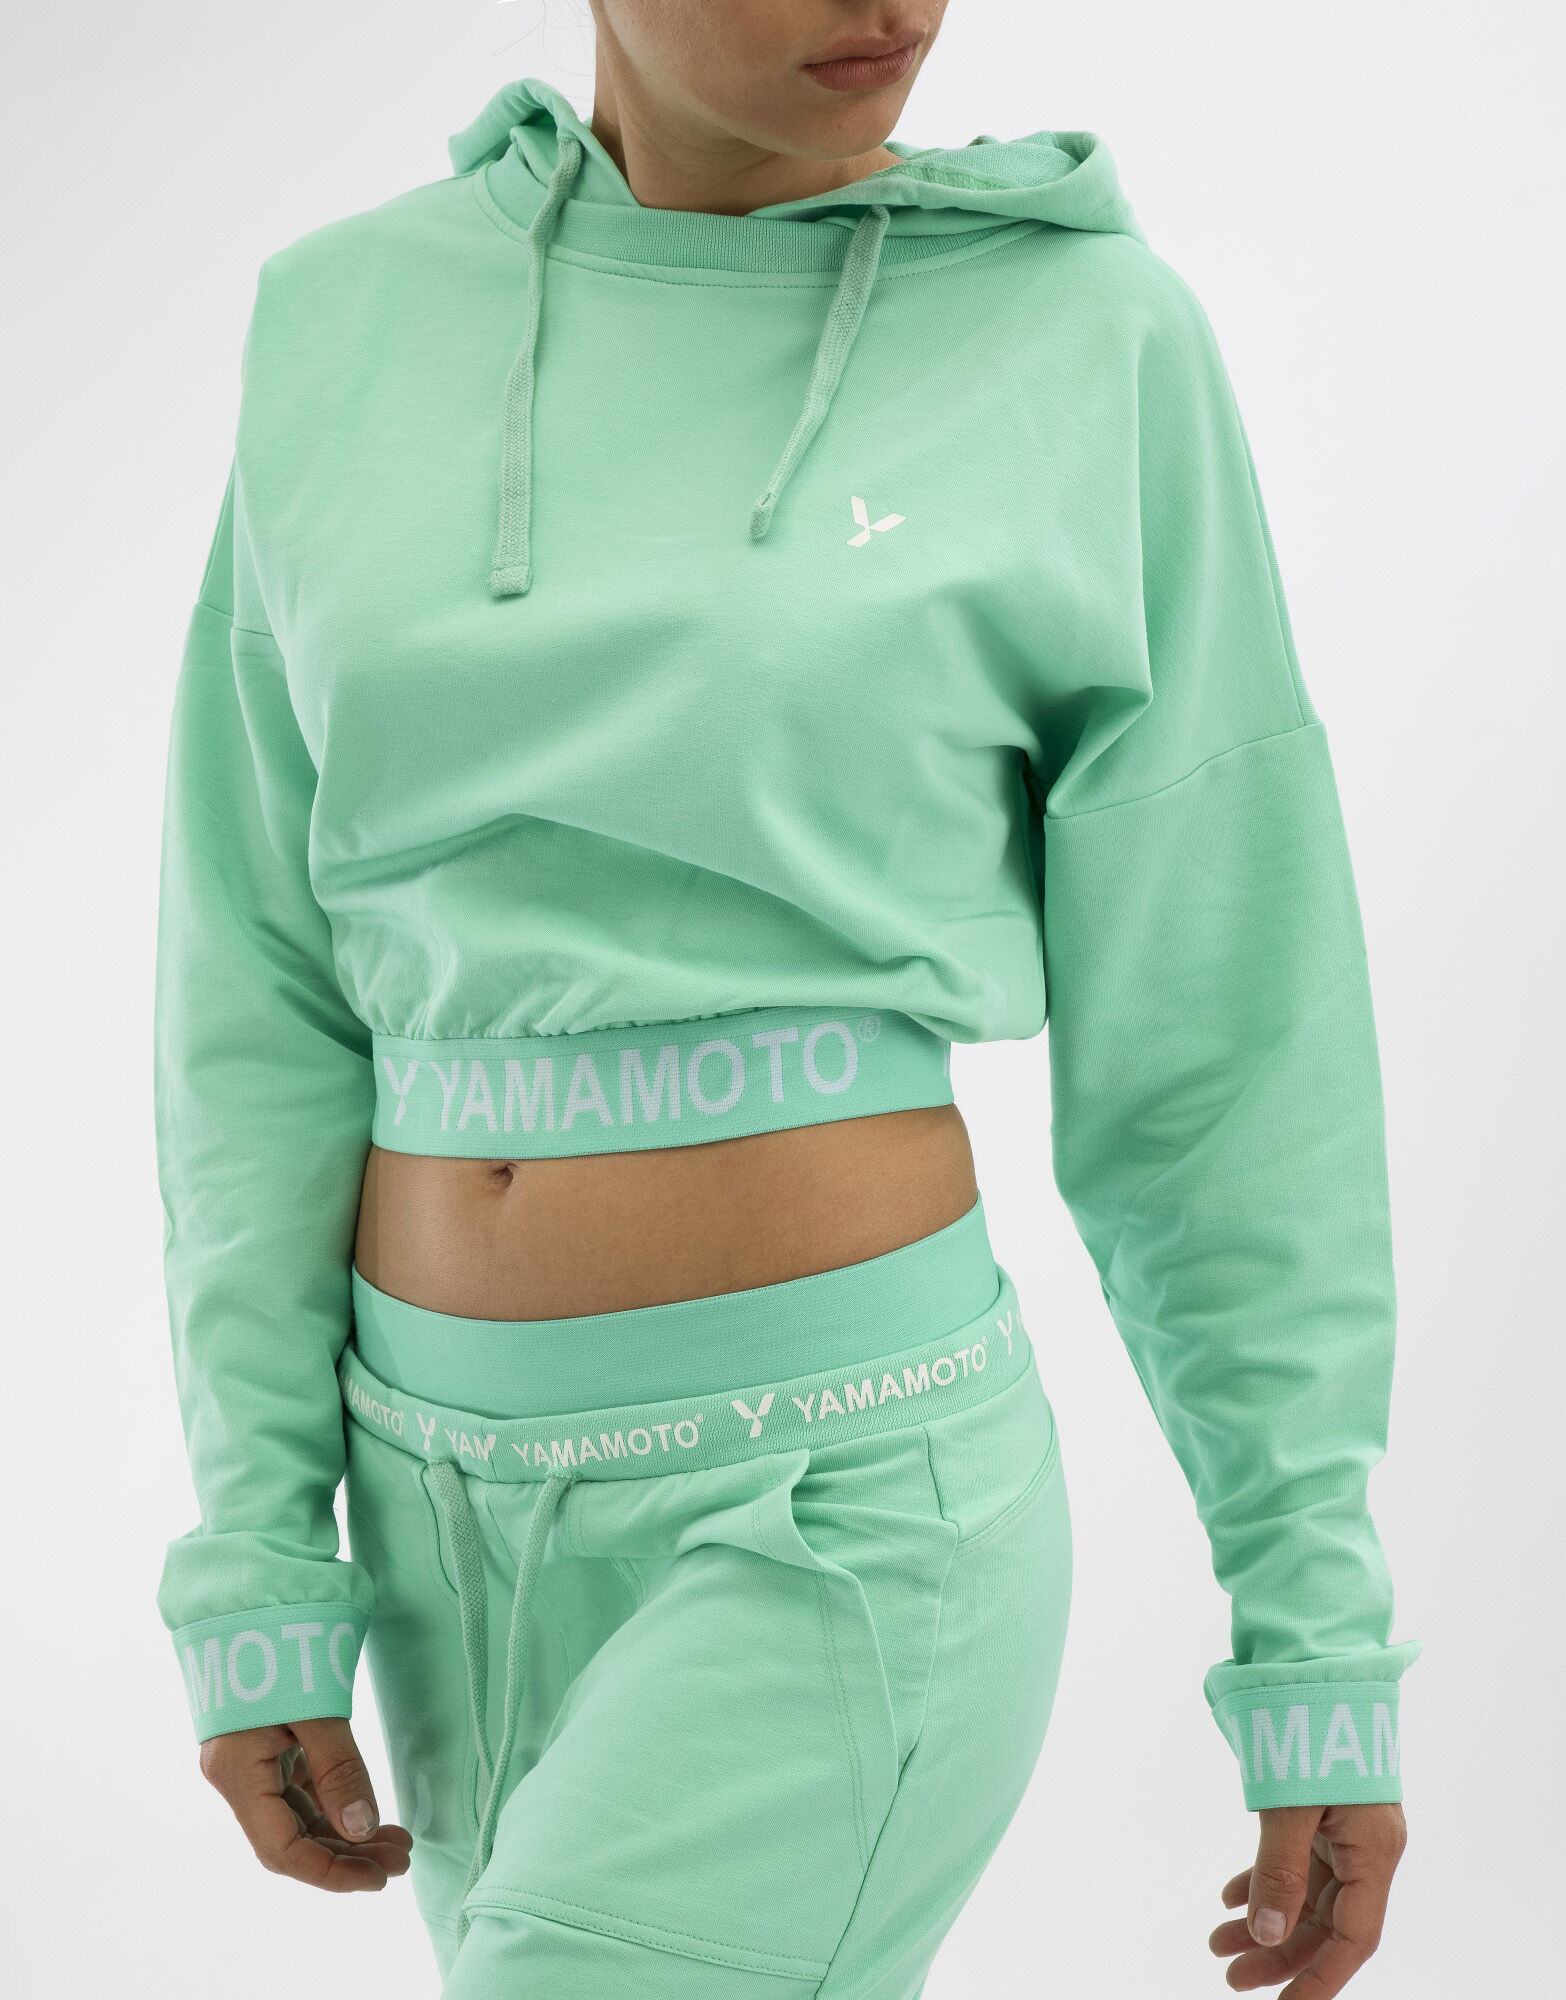 YAMAMOTO OUTFIT Lady Sweatshirt Colore: Verde Acqua M